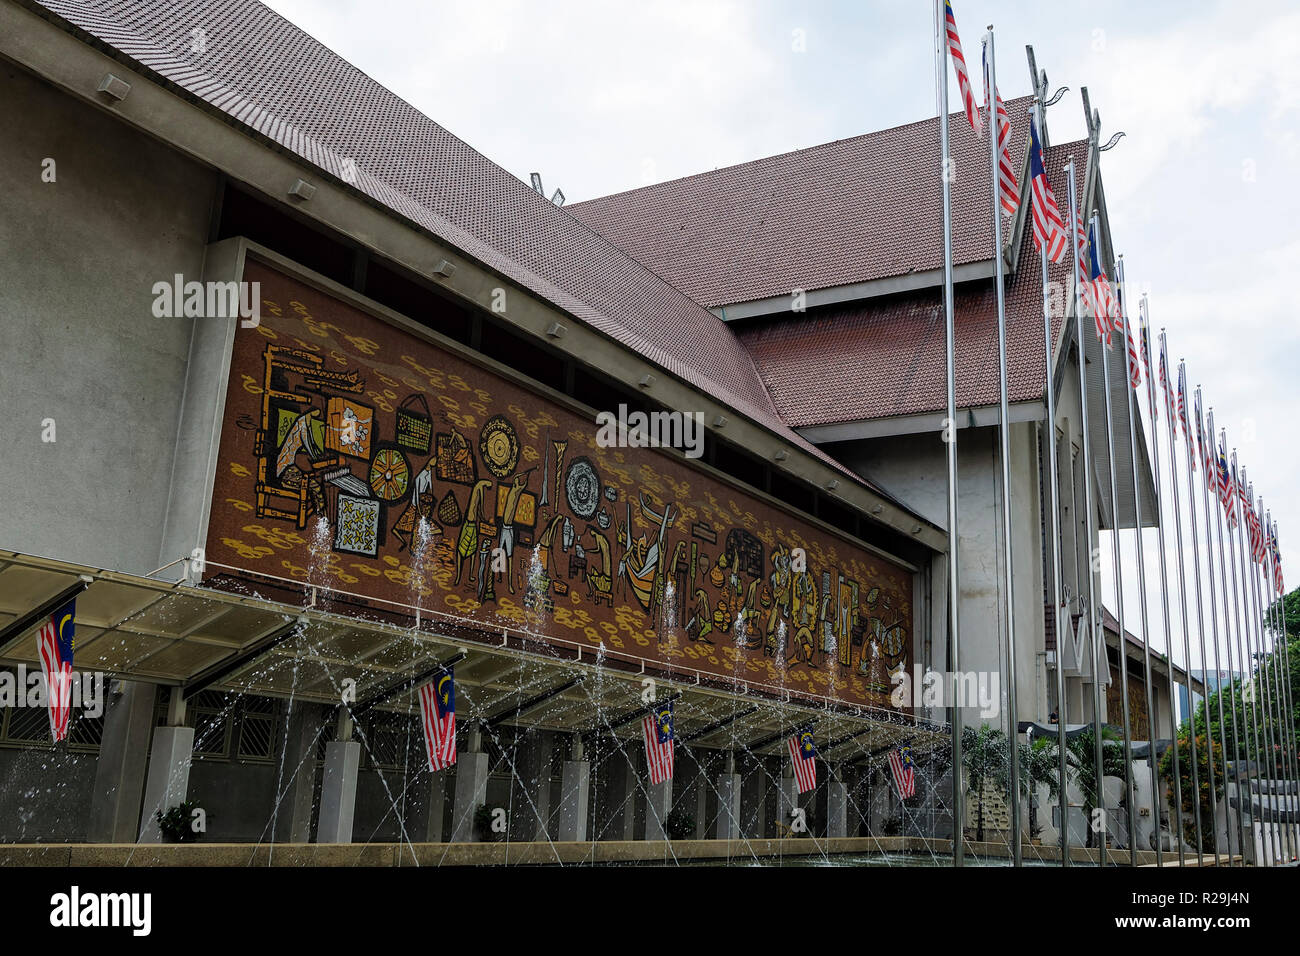 Kuala Lumpur, Malaysia - September 1, 2017: The exterior building architecture of Muzium Negara in Kuala Lumpur, Malaysia - View of the Malaysian Nati Stock Photo